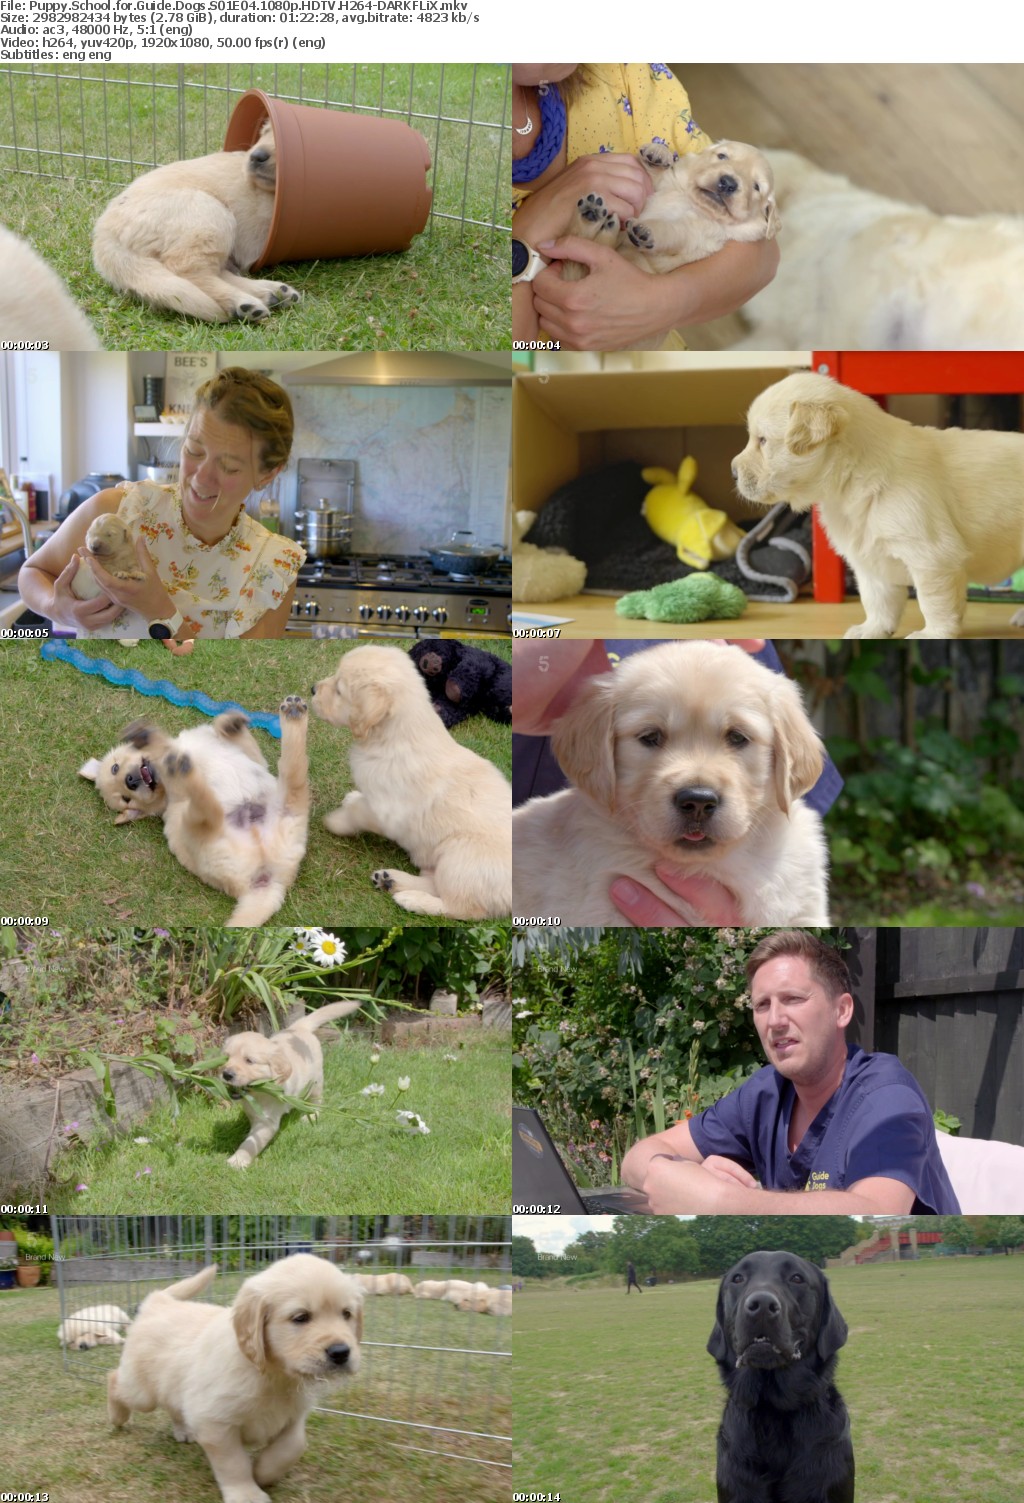 Puppy School for Guide Dogs S01E04 1080p HDTV H264-DARKFLiX